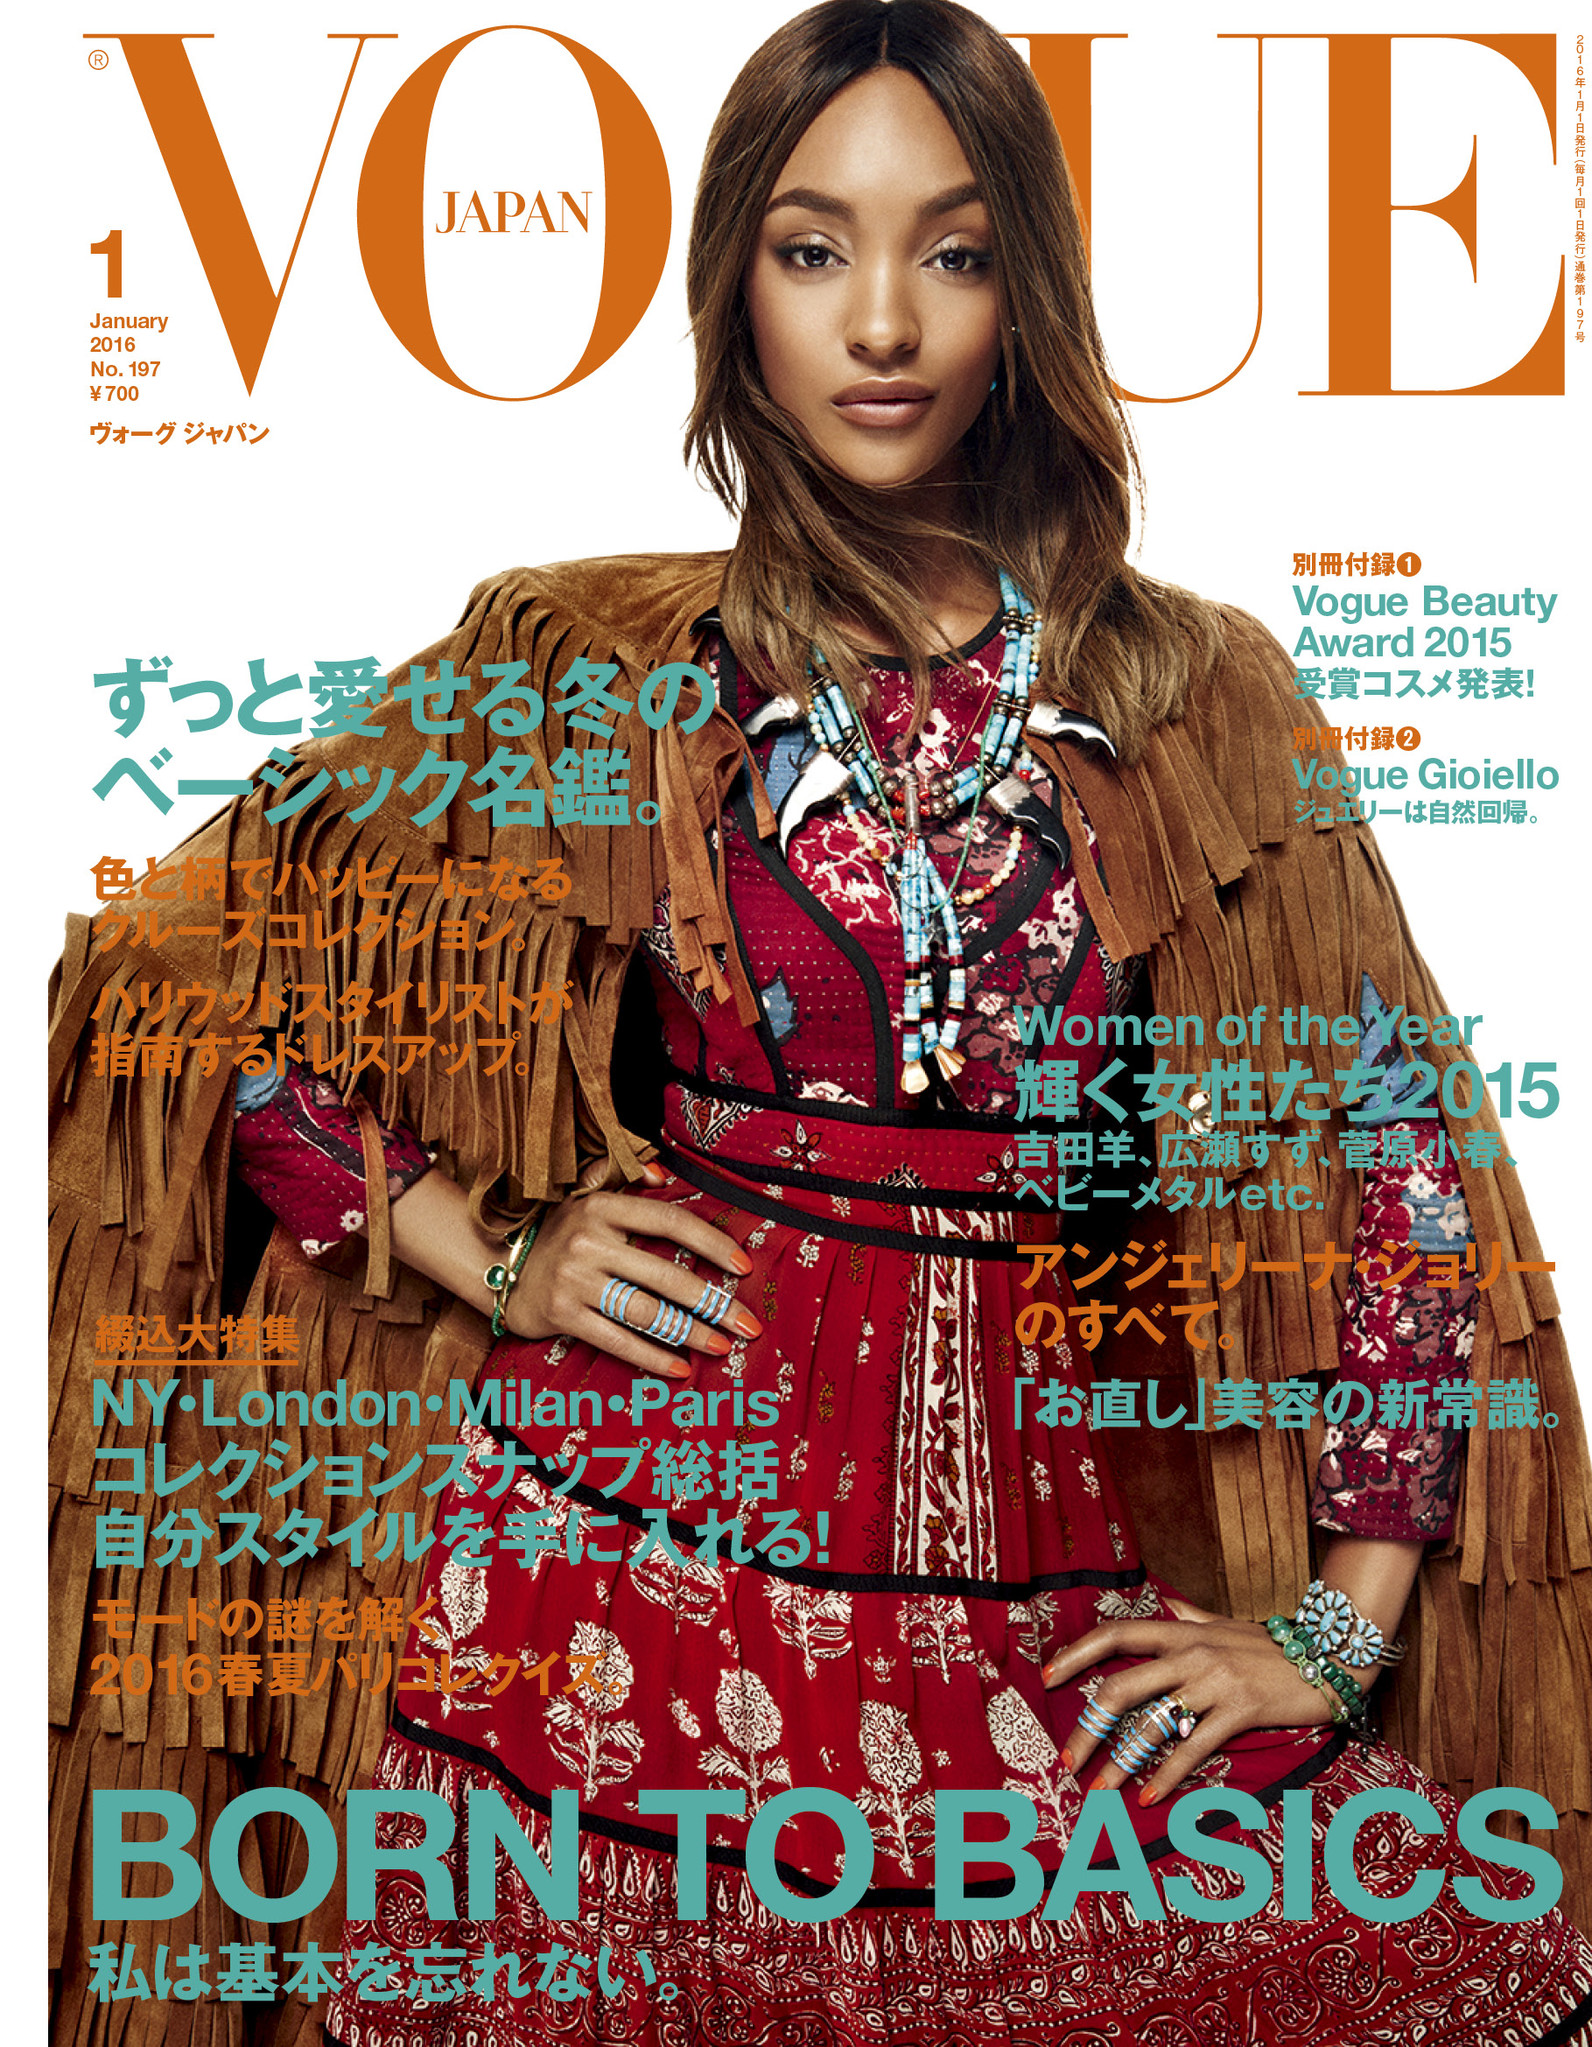 Vogue Japan Women Of The Year Vogue Beauty Award